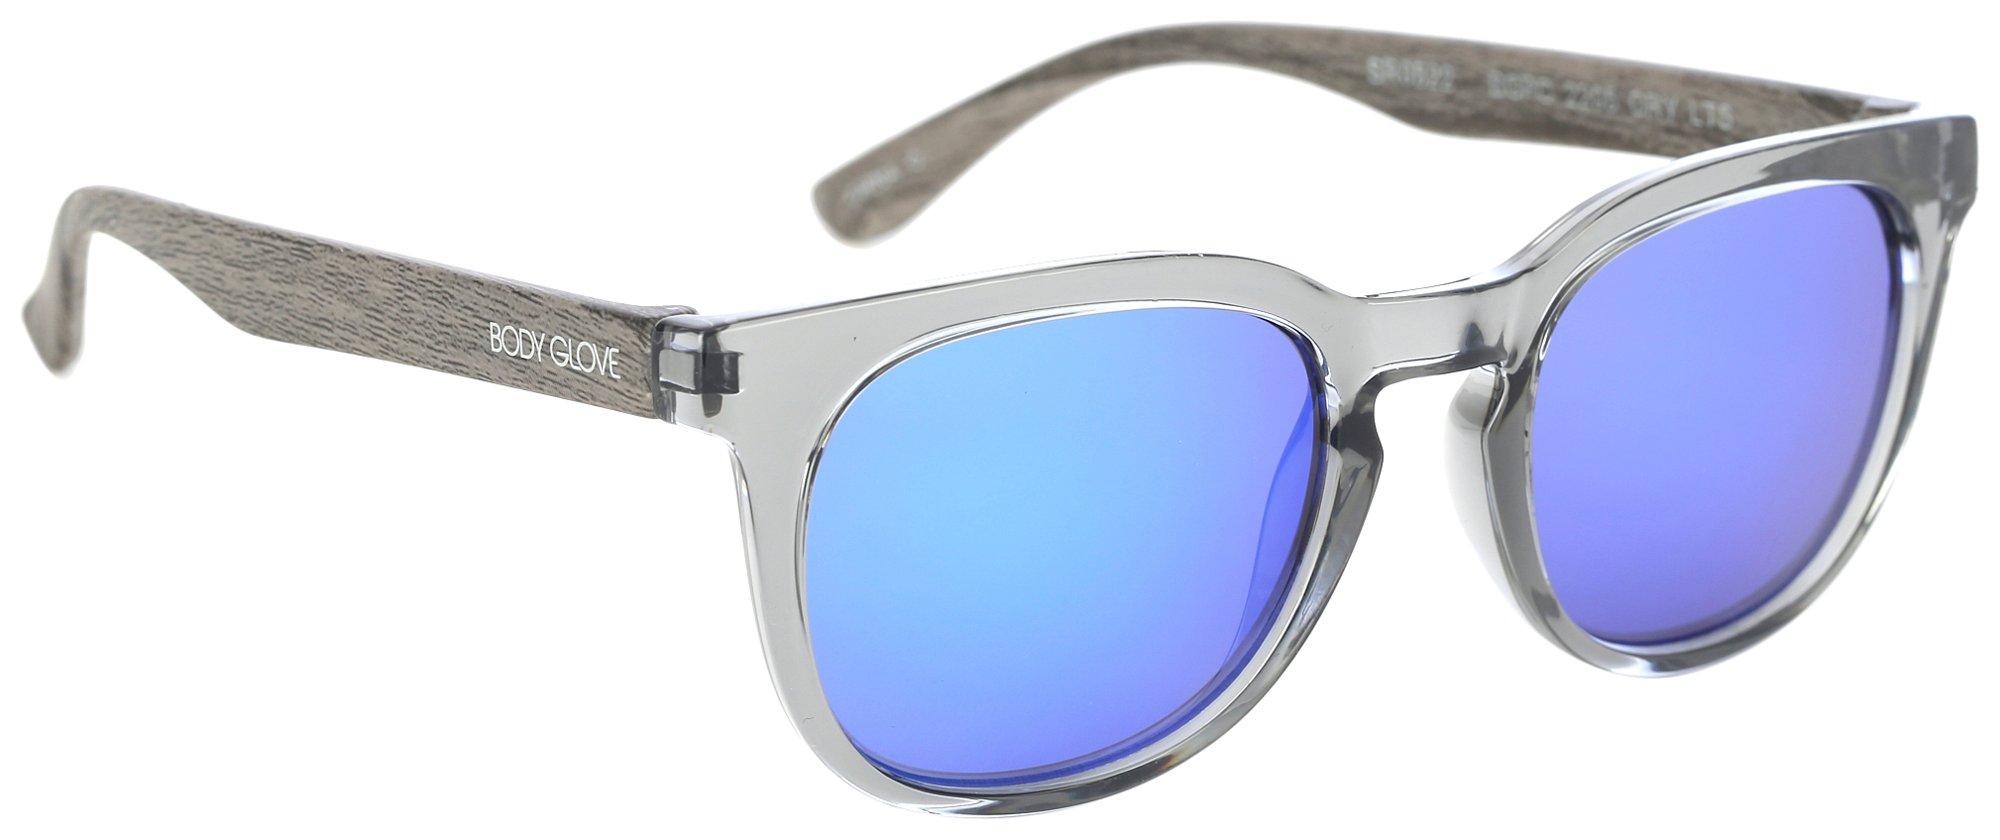 Maxwell Square Solid Mirrored Sunglasses